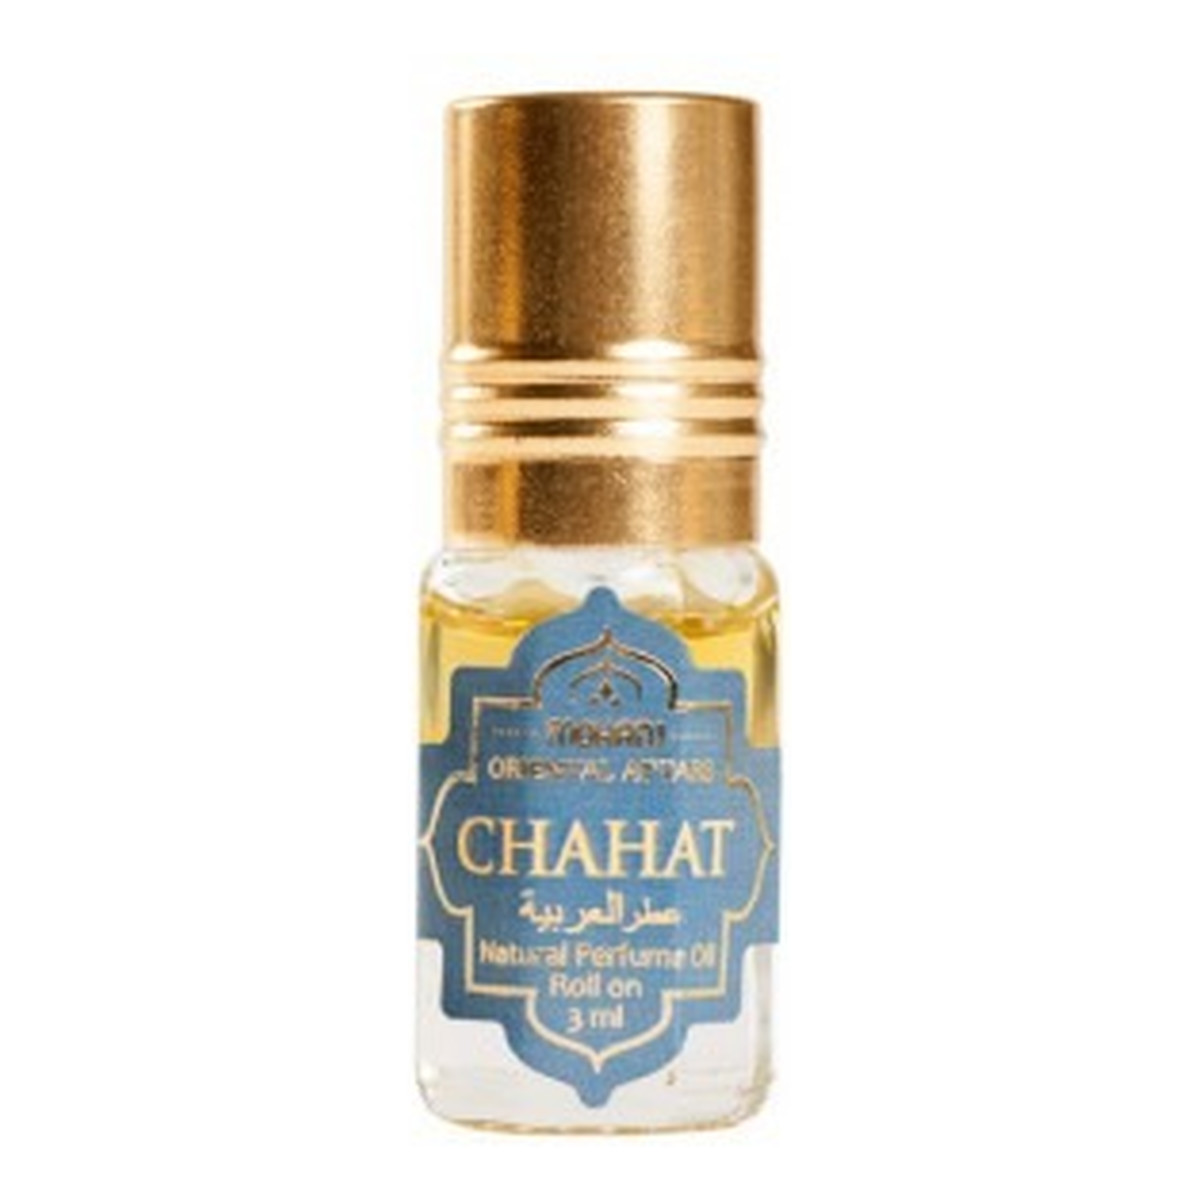 Mohani Chahat Orientalne Perfumy 3ml